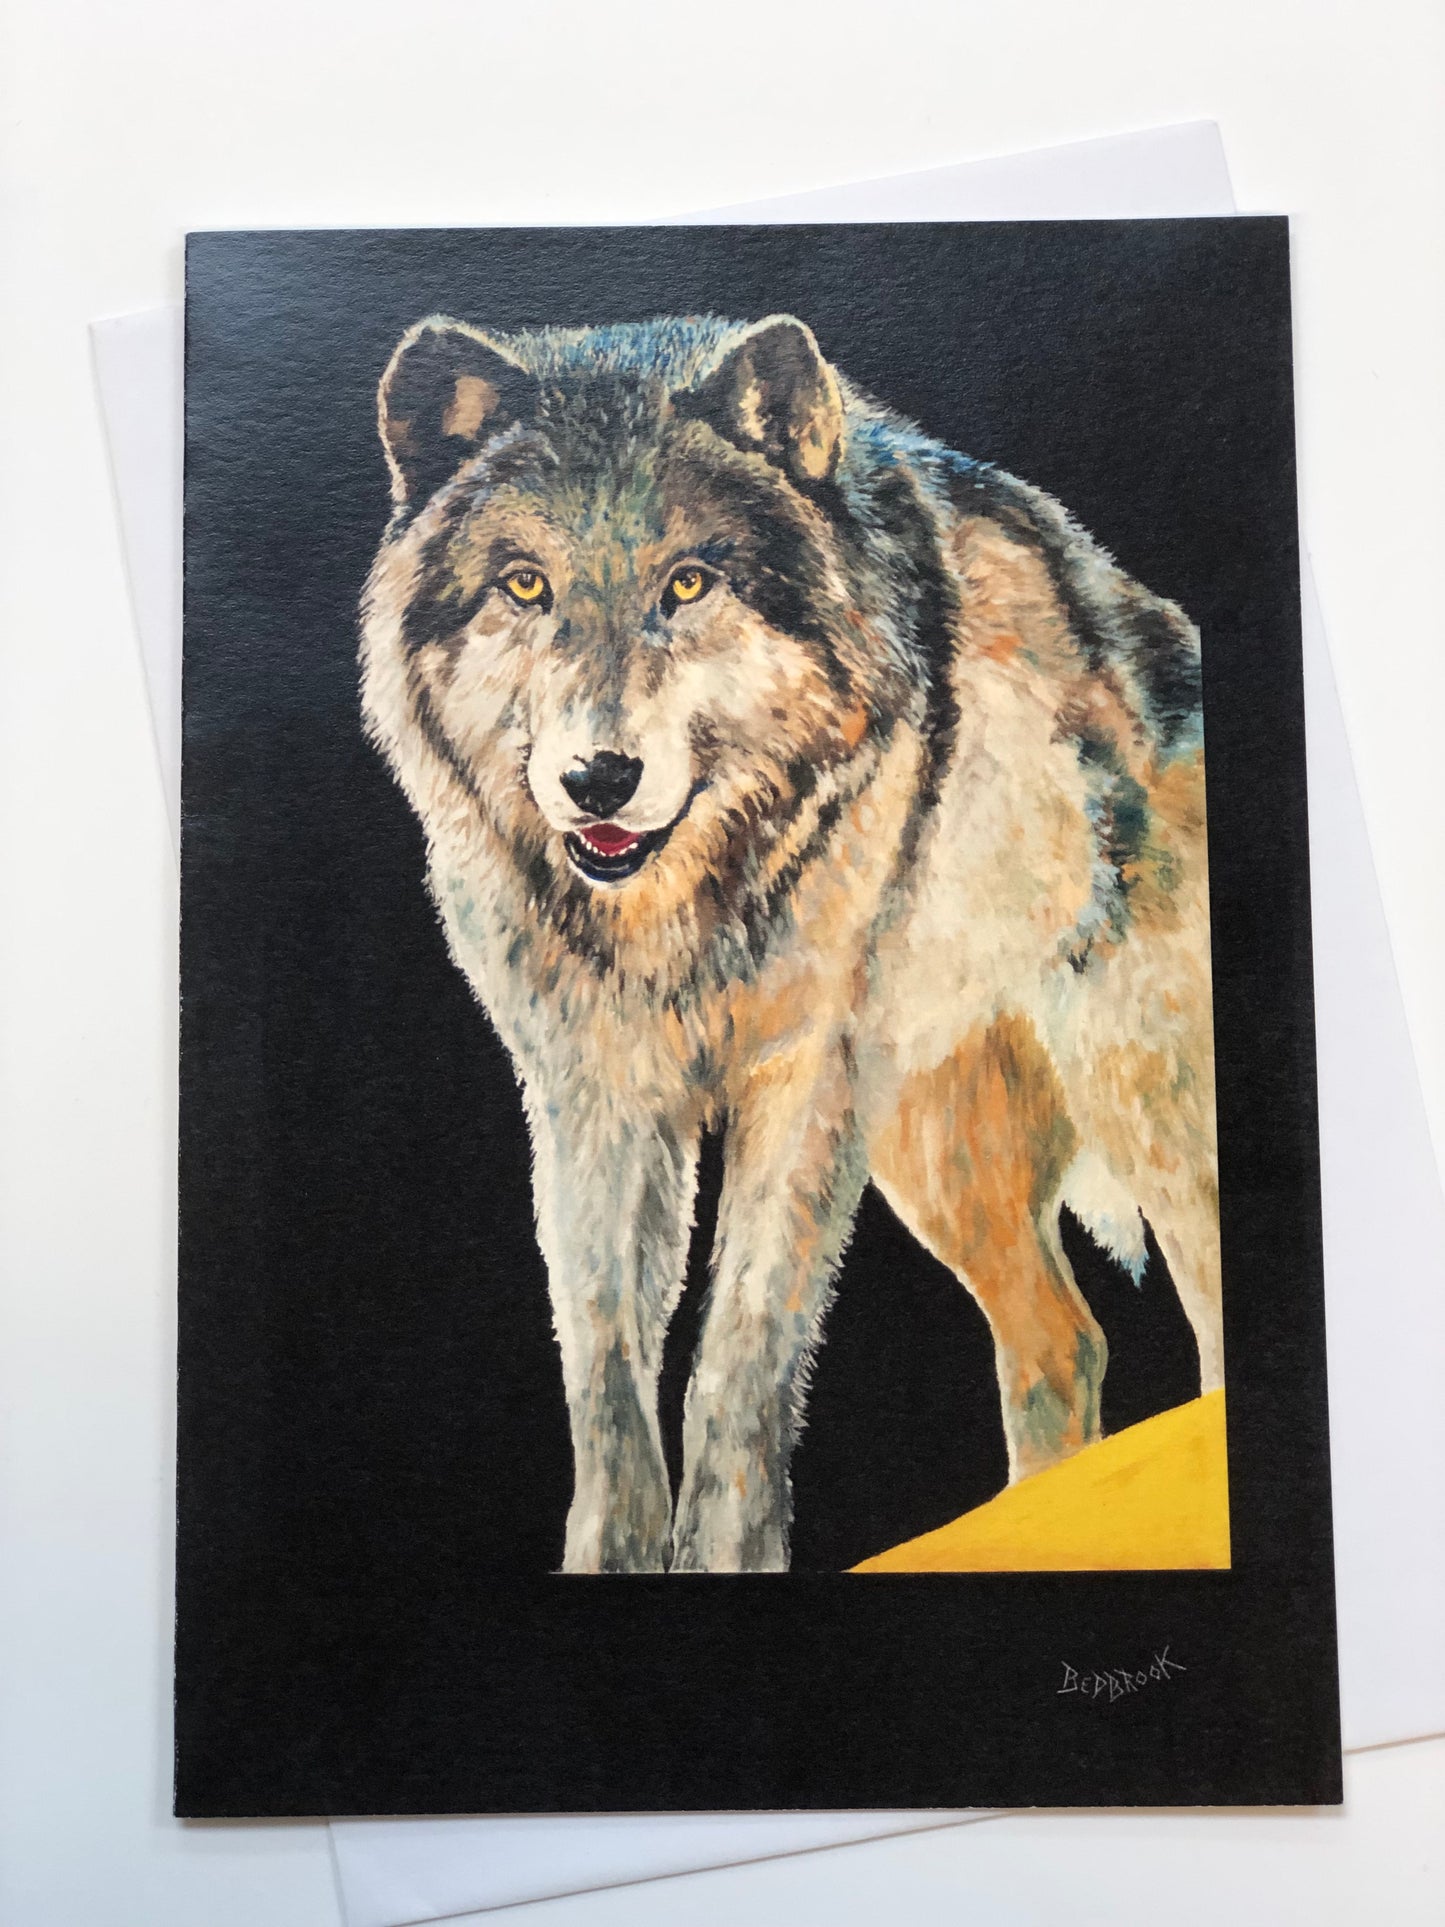 Moonwolf - Card/art print